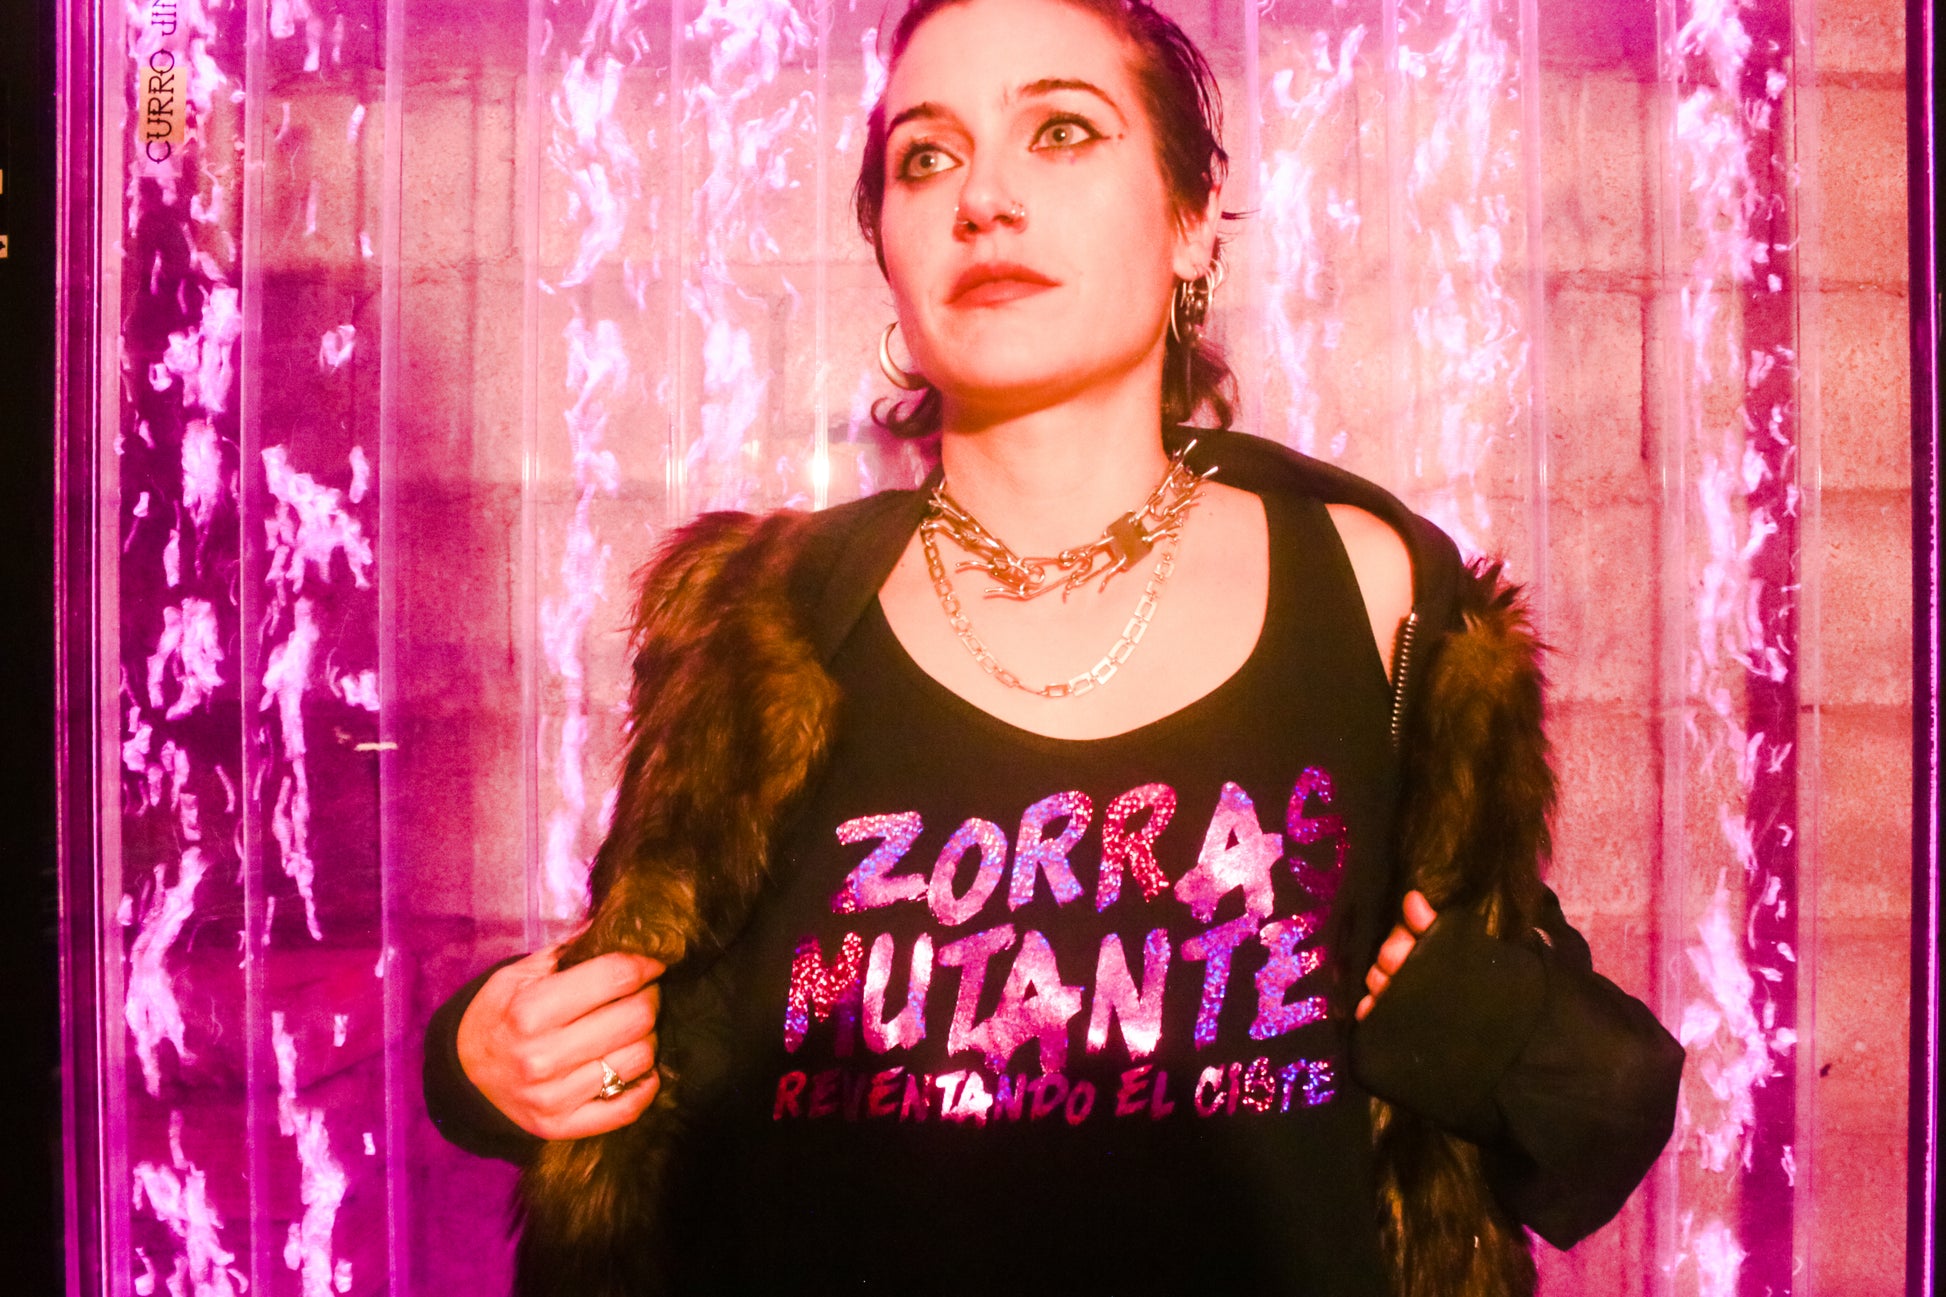 Camiseta tirantes negra ecológica ropa feminista algodón orgánico comercio justo donnaharaway vnsmatrix cyborg